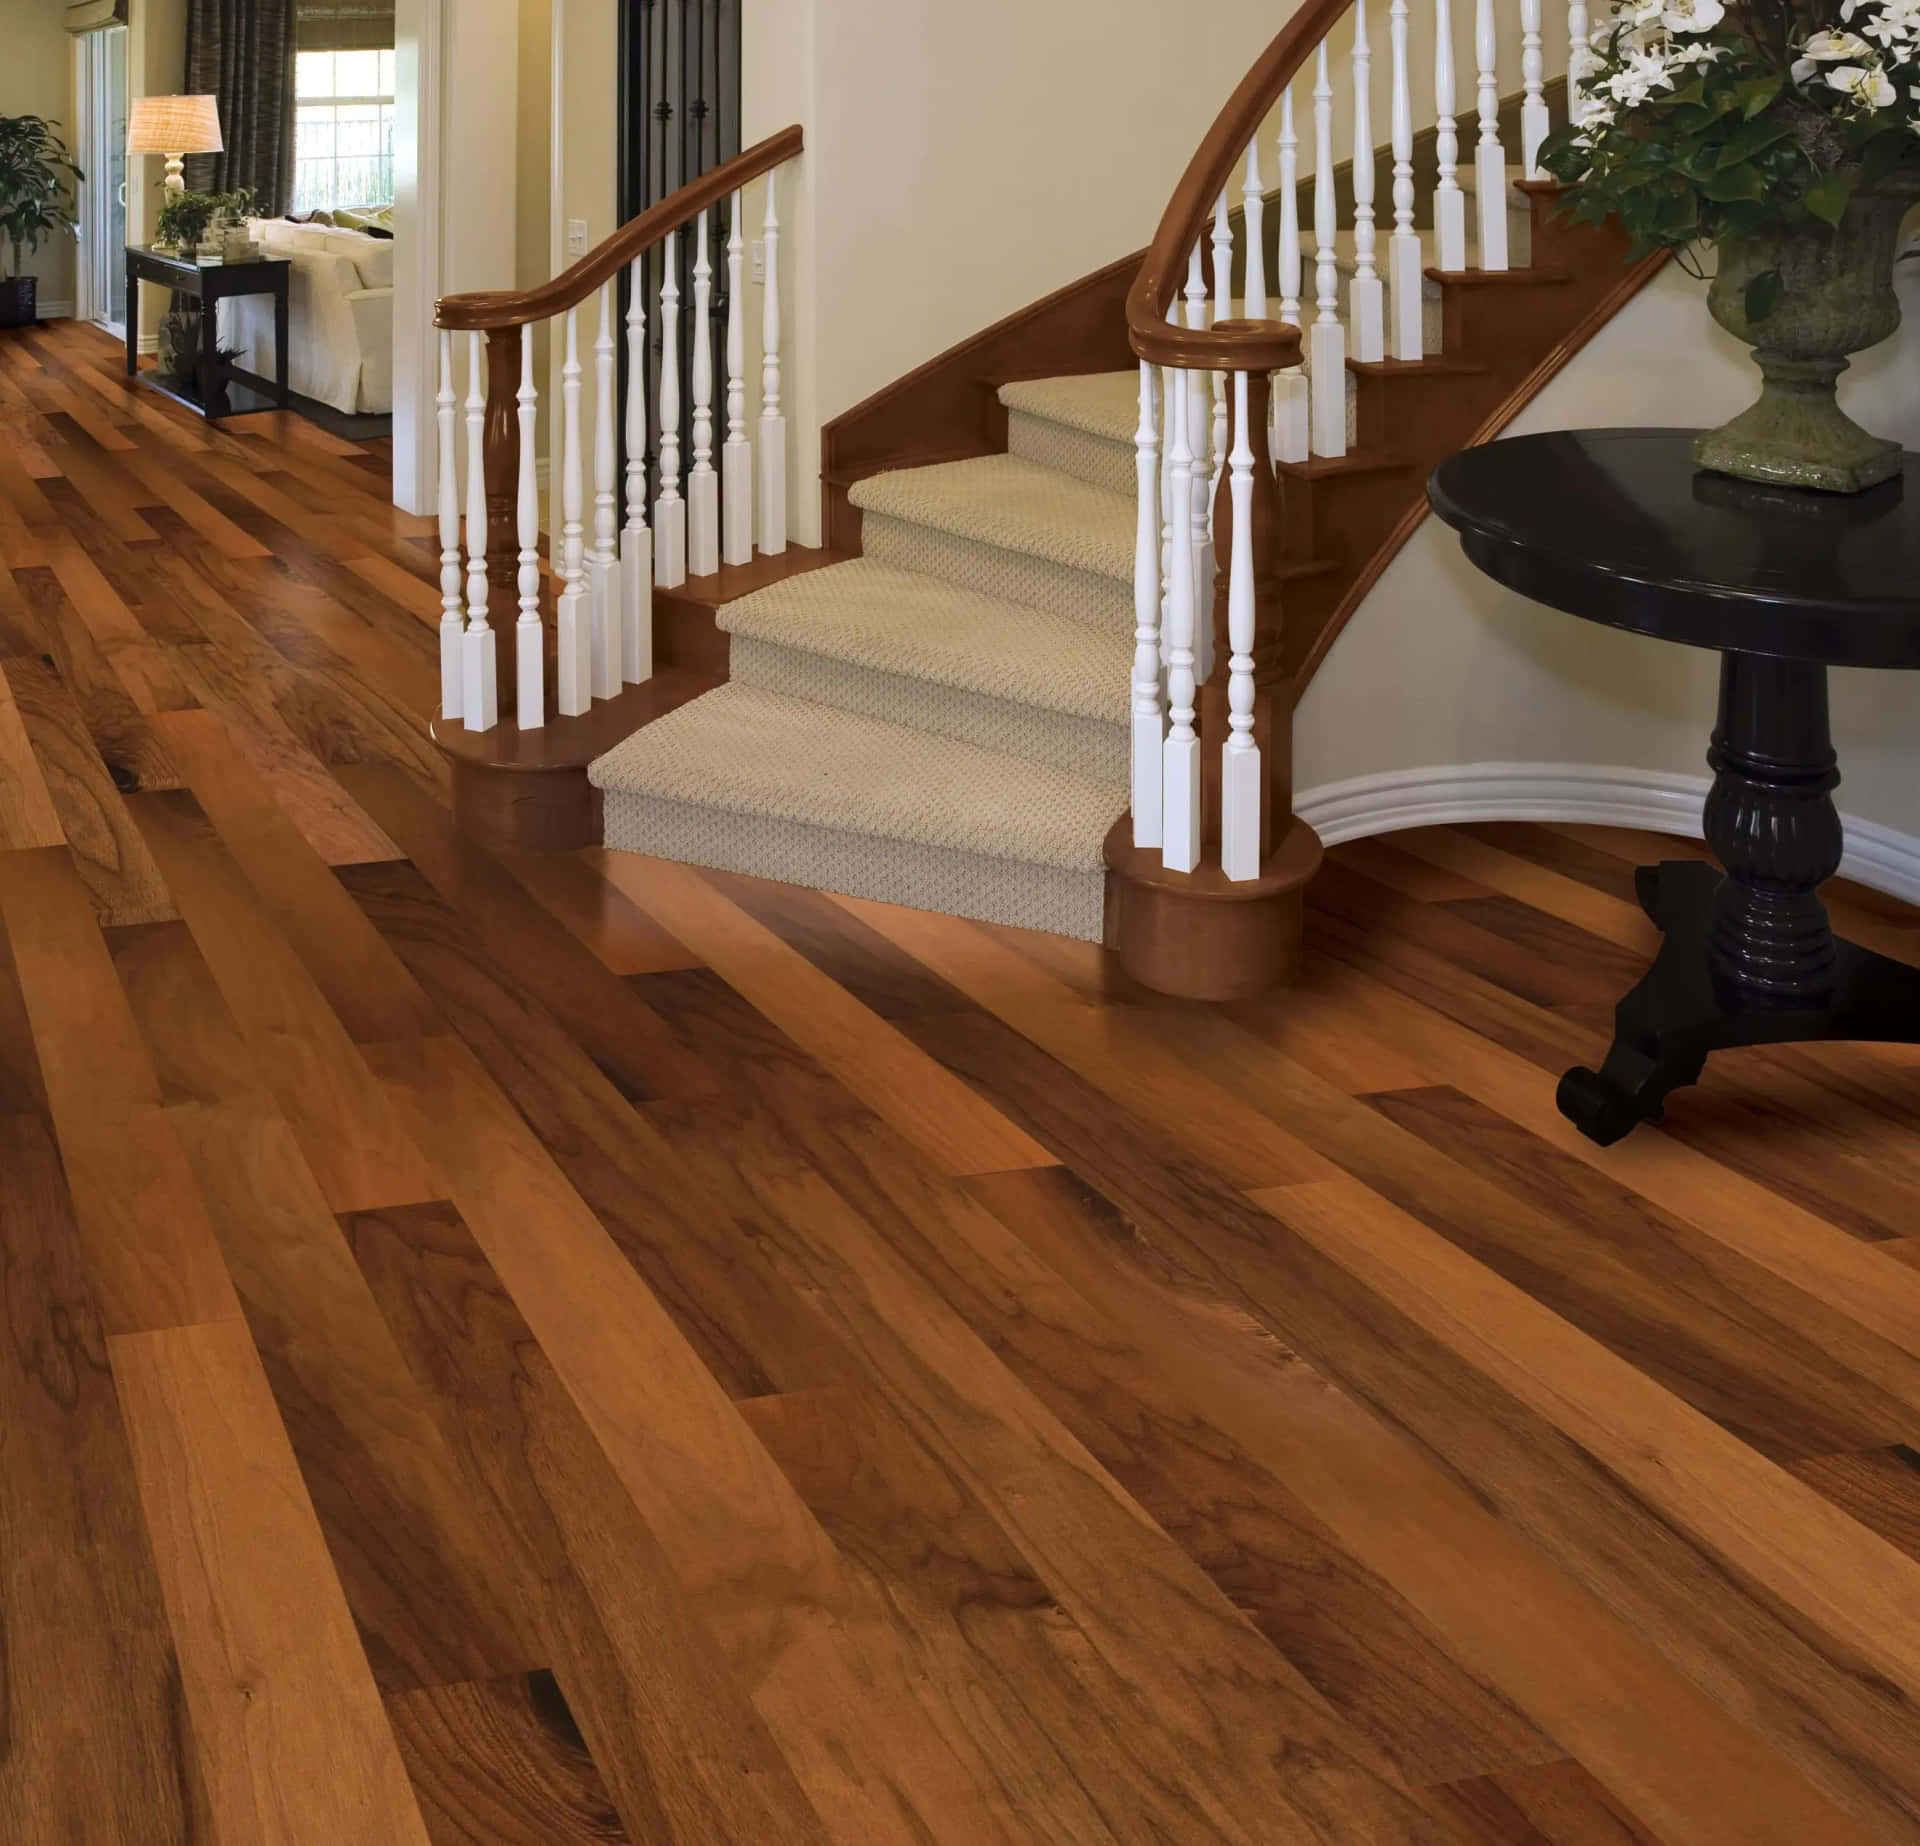 Beautiful and Stylish: Enjoy the Look of Wood Flooring